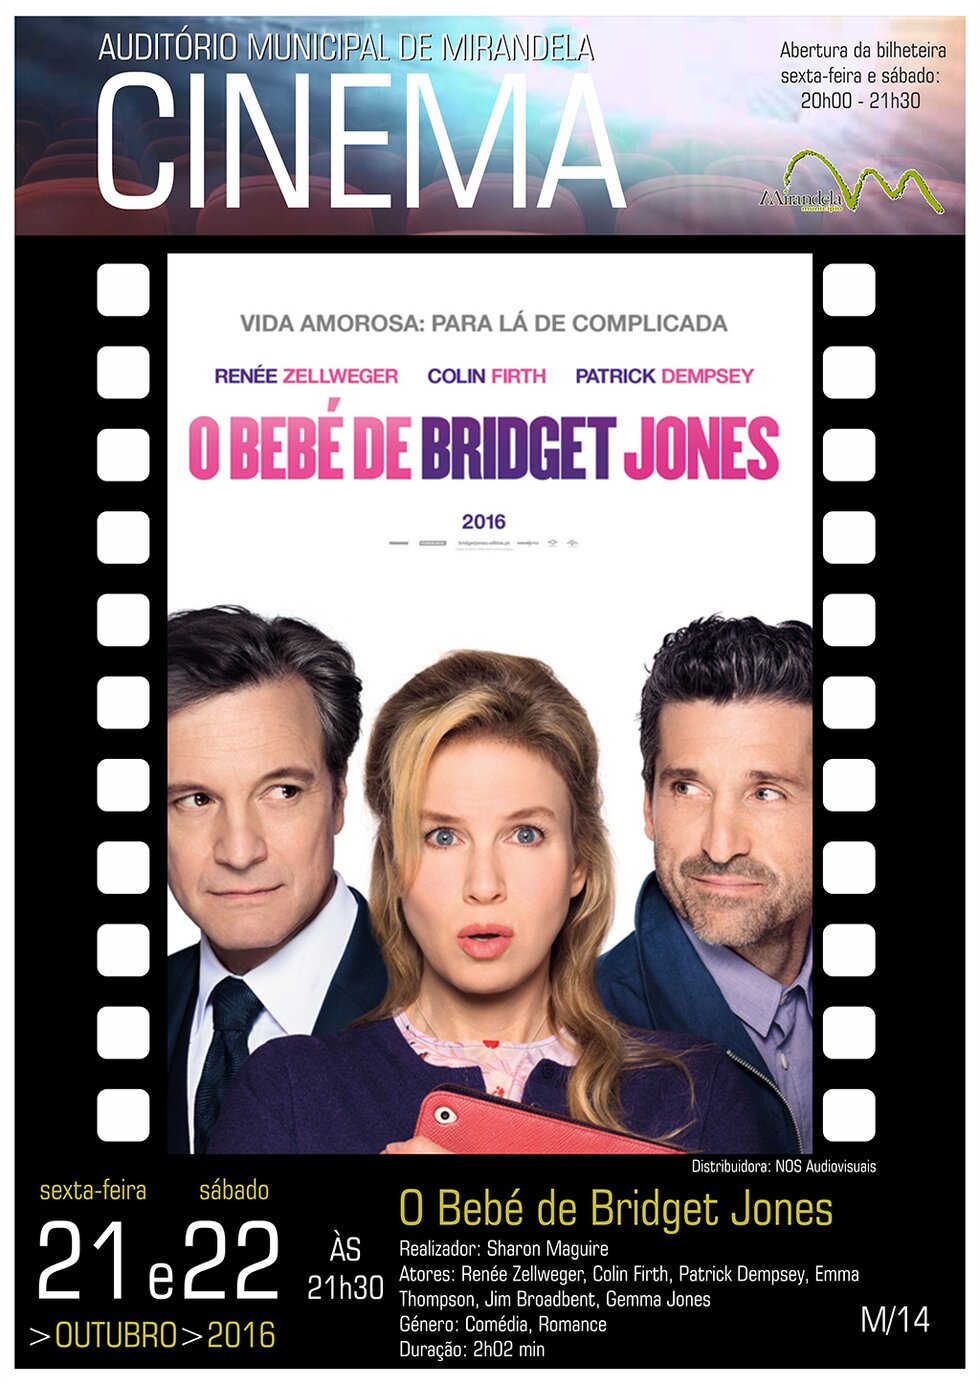 cartaz_filme_O_Beb__de_Bridget_Jones